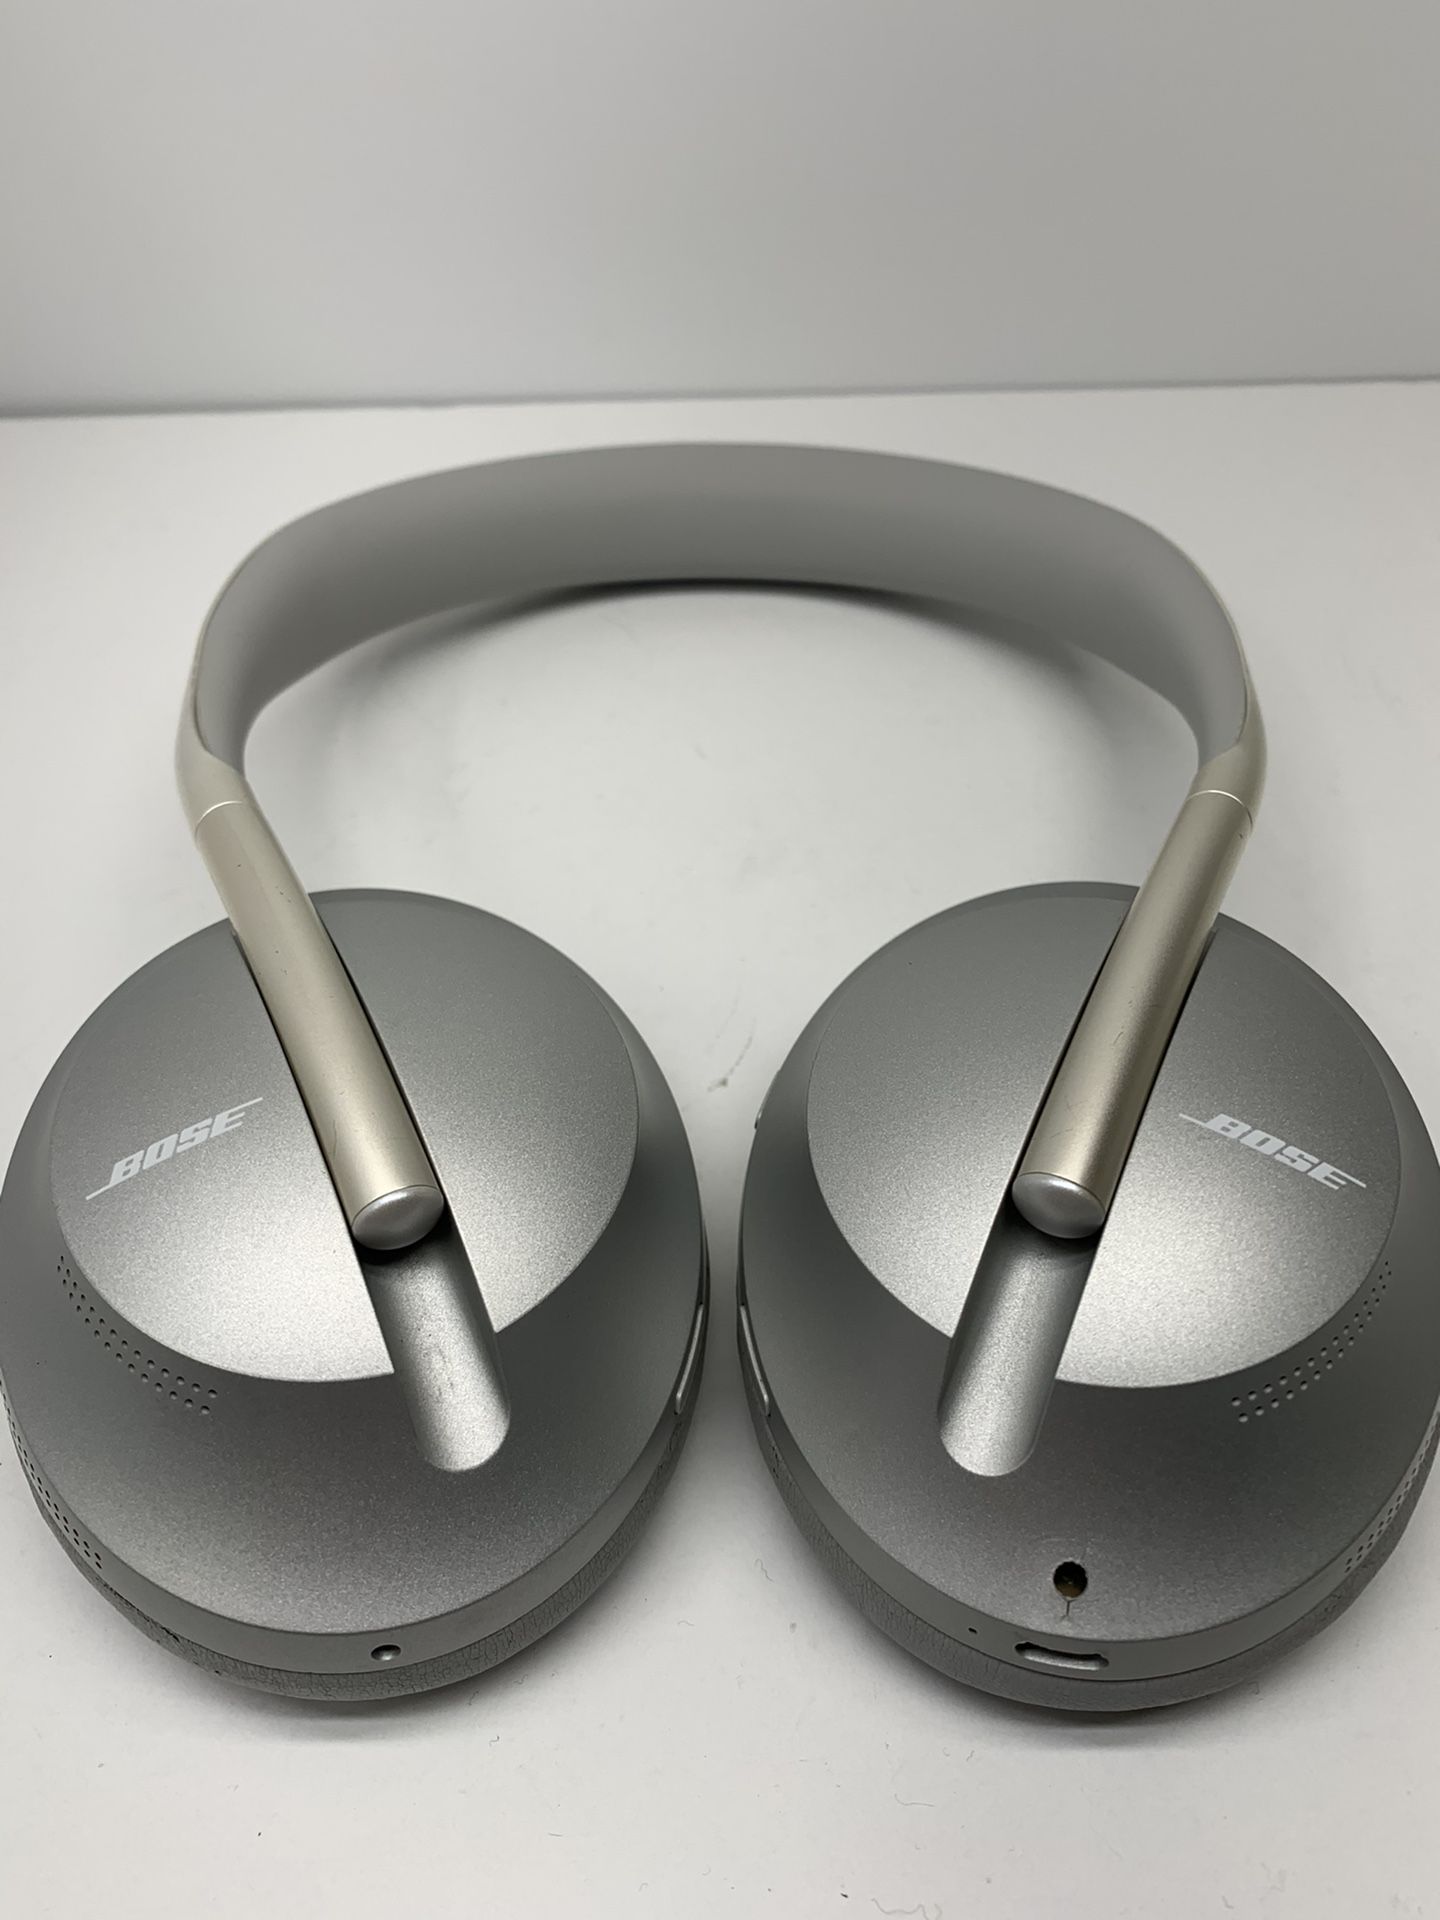 Bose 700 Over The Ear Bluetooth Headphones 127962